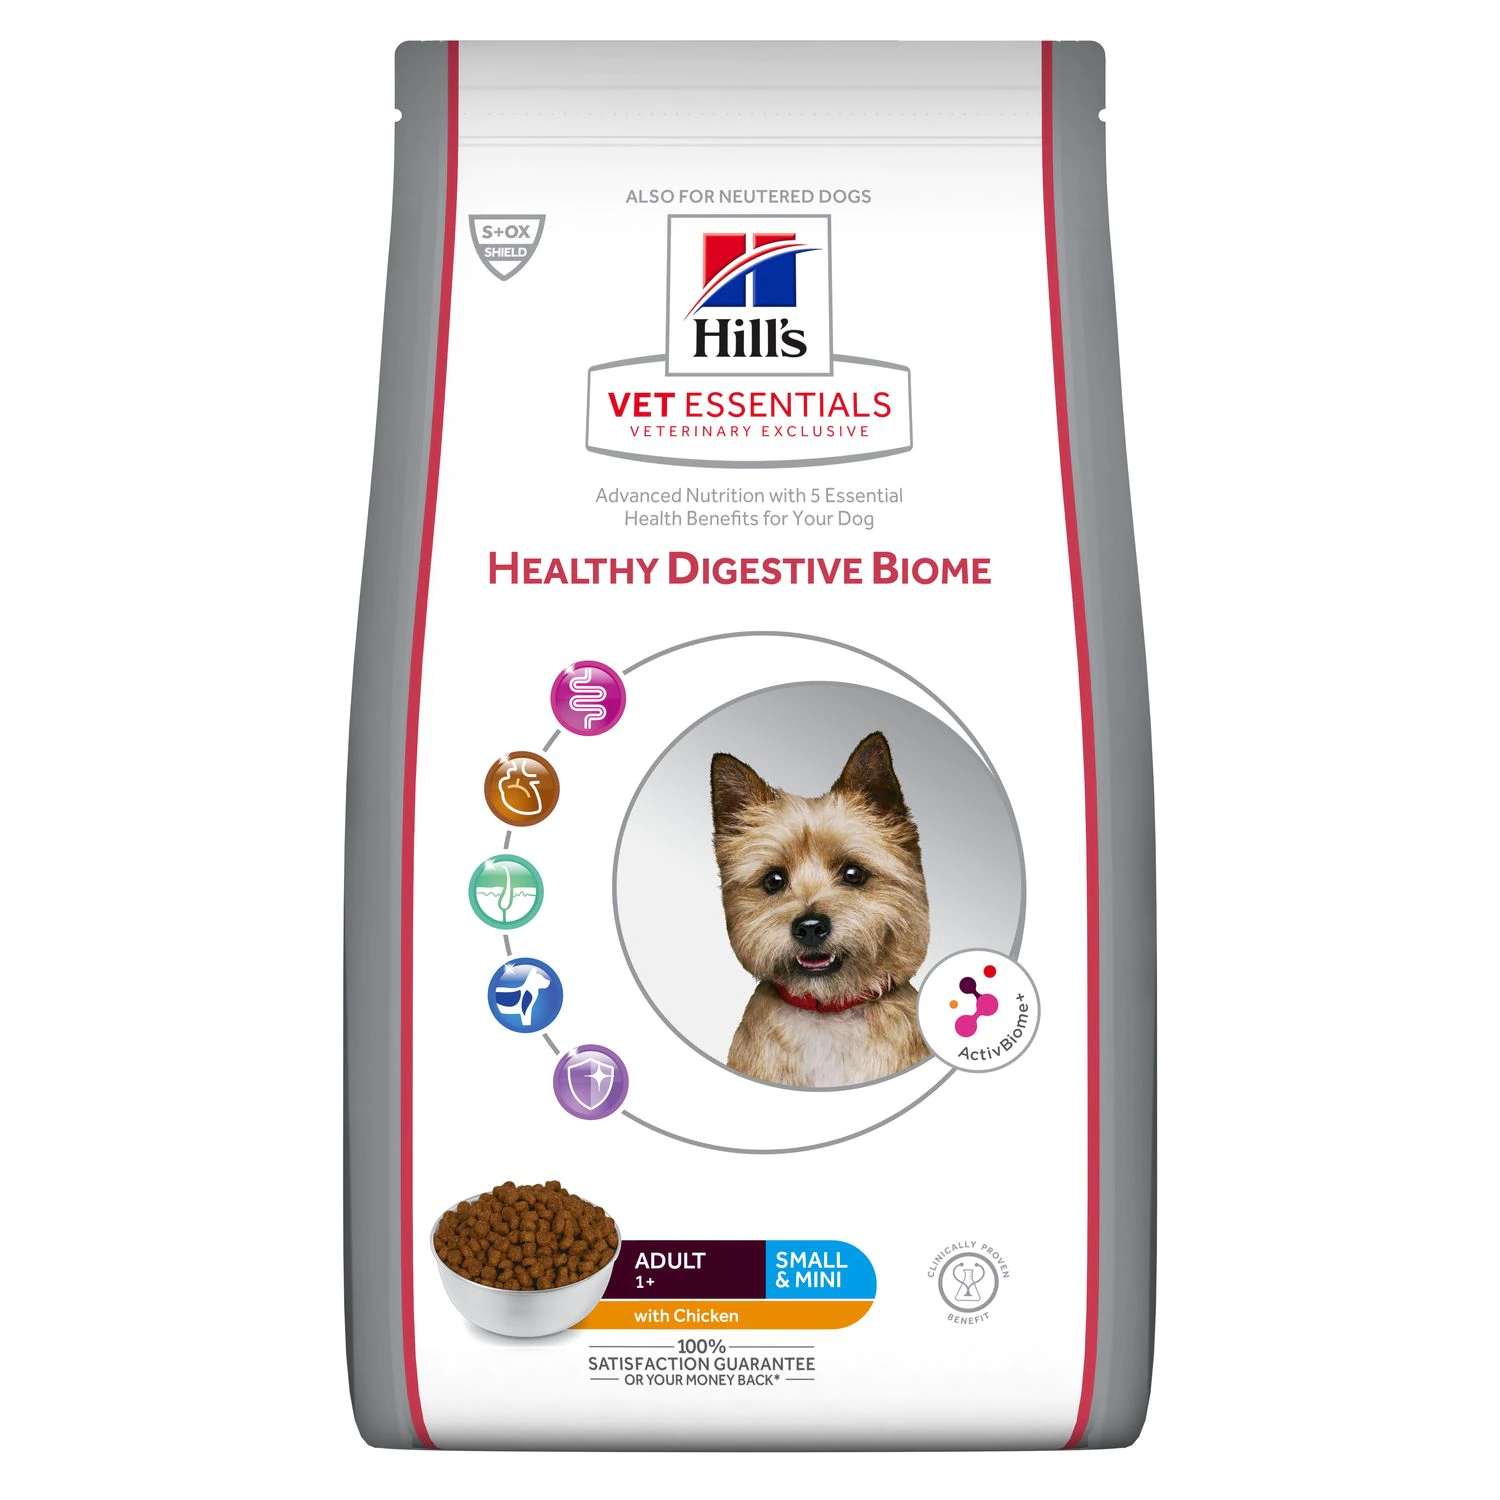 Hill's Vet Essentials Healthy Digestive Biome Adult Small & Mini Hond - 2kg